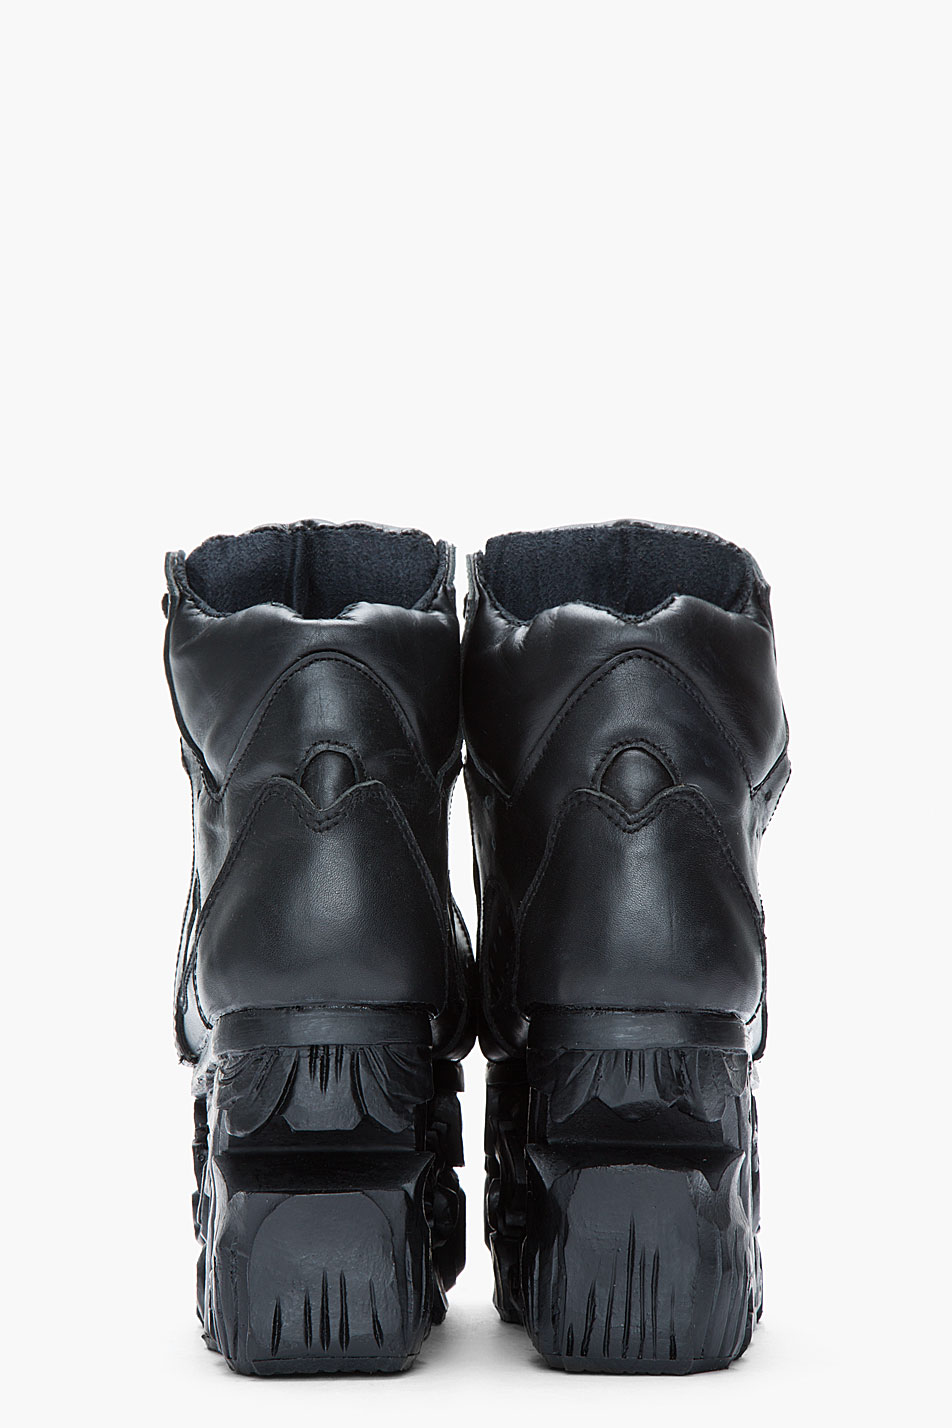 Lyst - Ktz Black Leather Carved Sole Platform Sneakers in Black